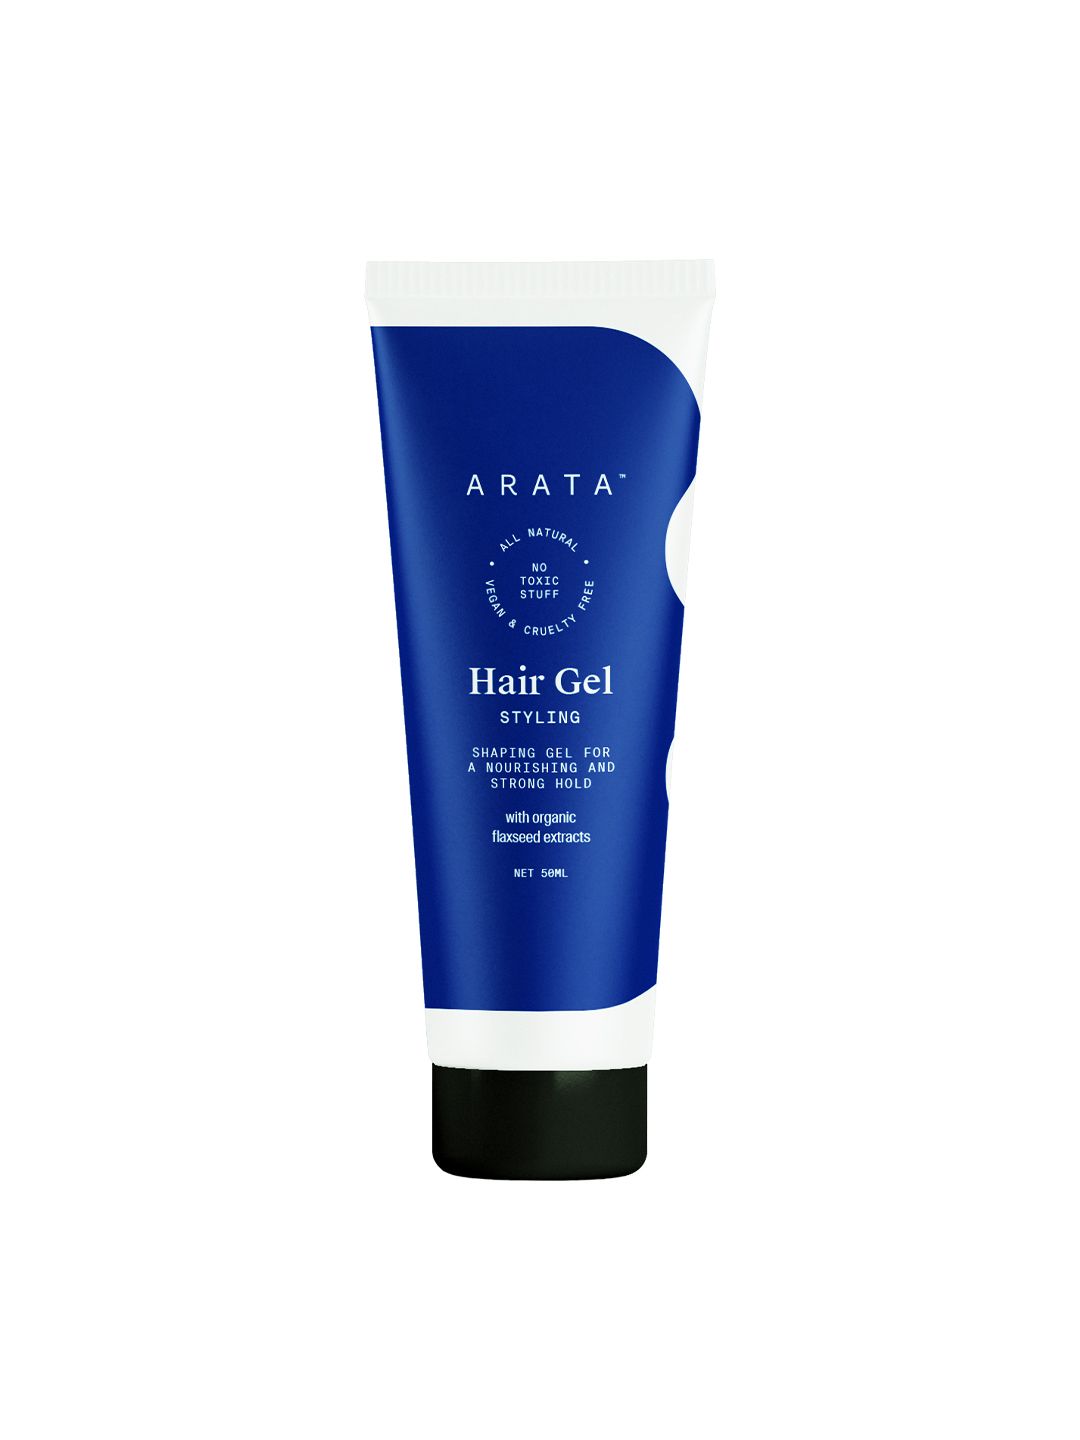 ARATA White Hair Gel (50ml) Price in India